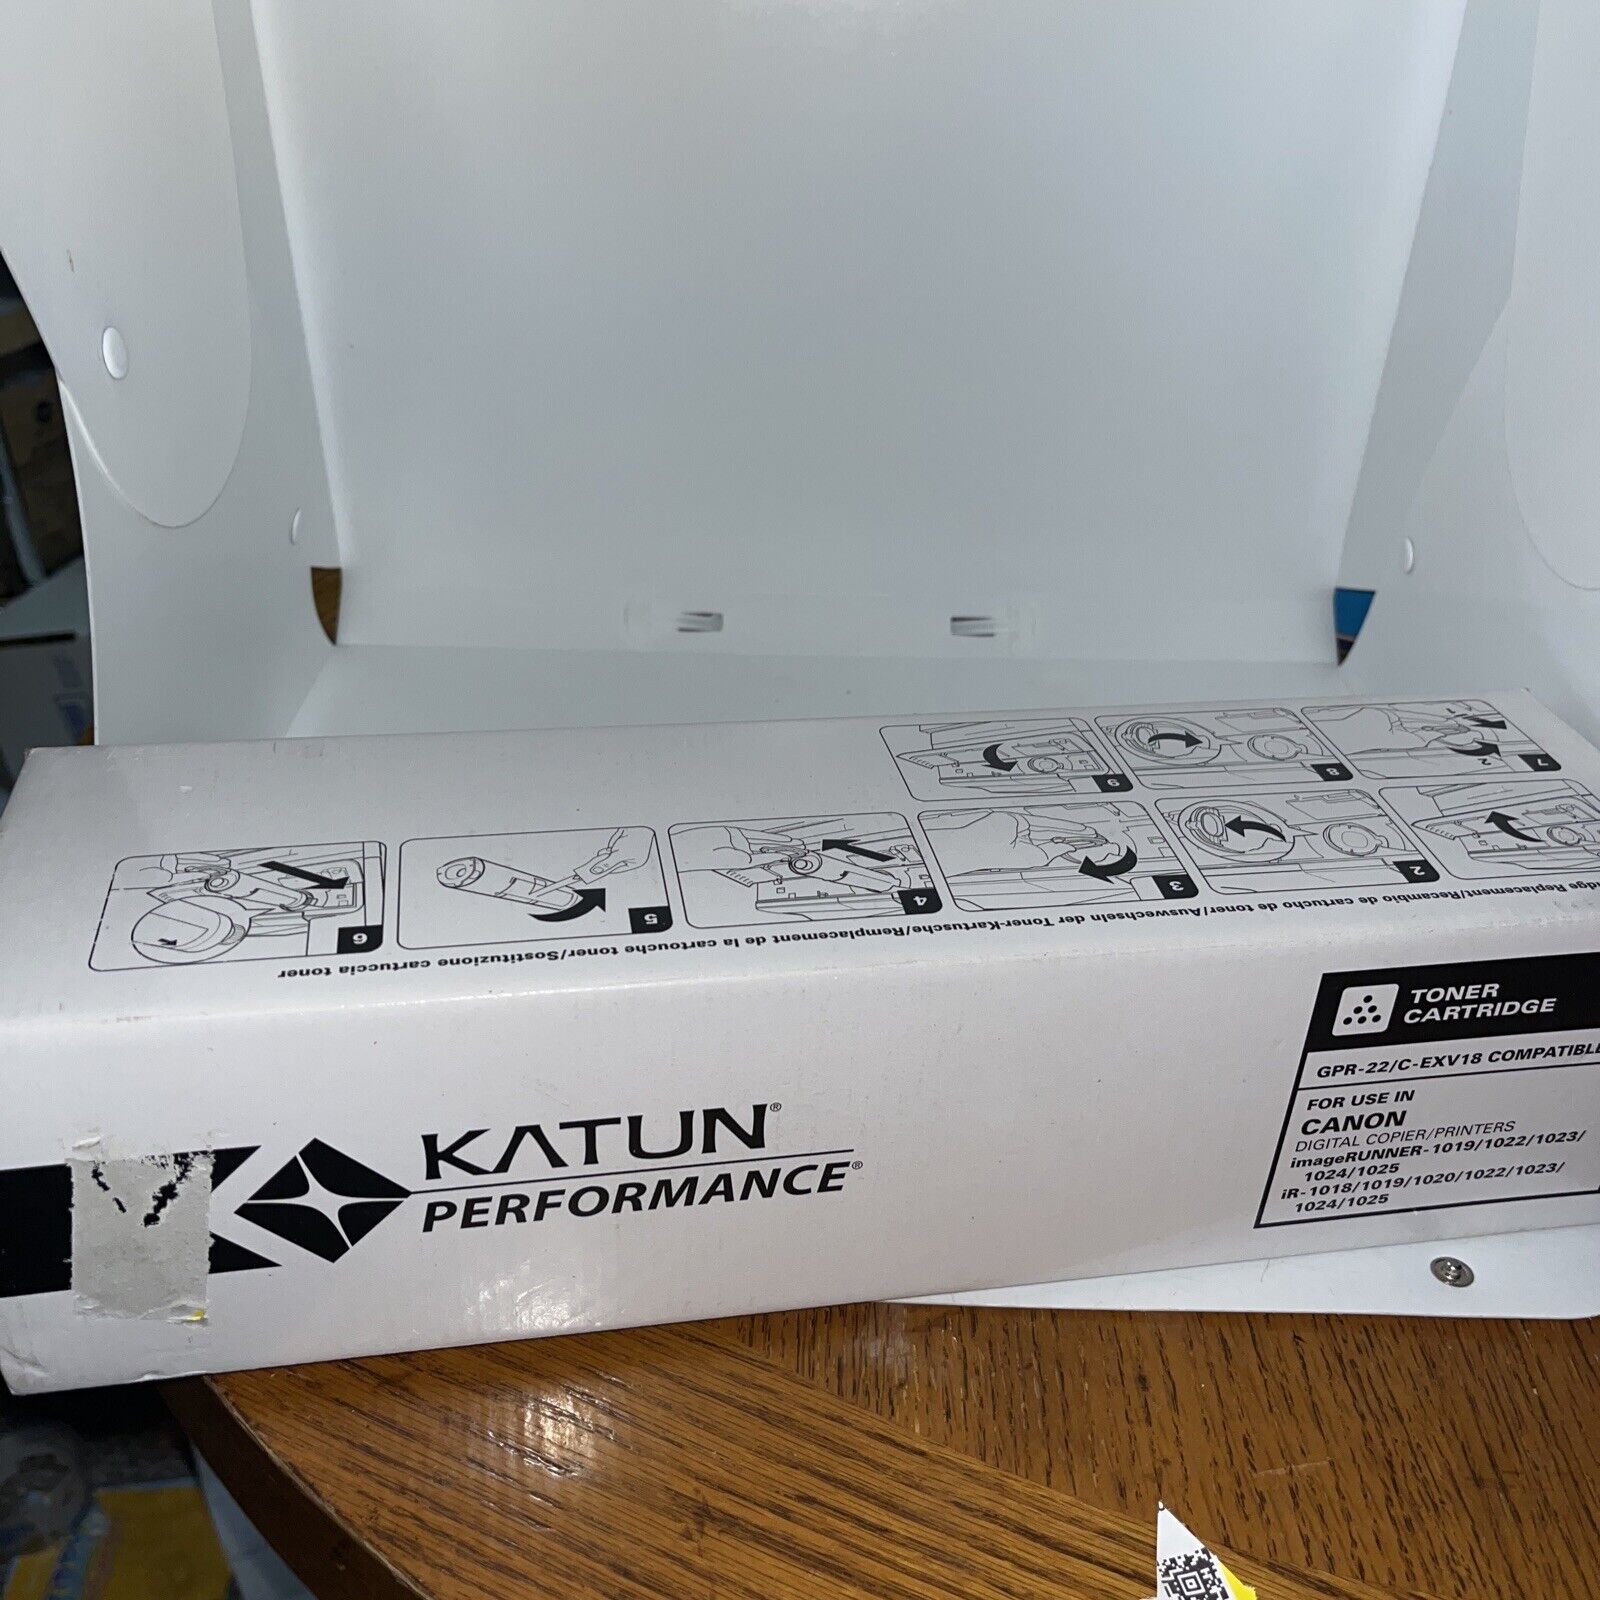 Katun GPR-22/C - EXV18 Compatible Toner iR10XX New in Box